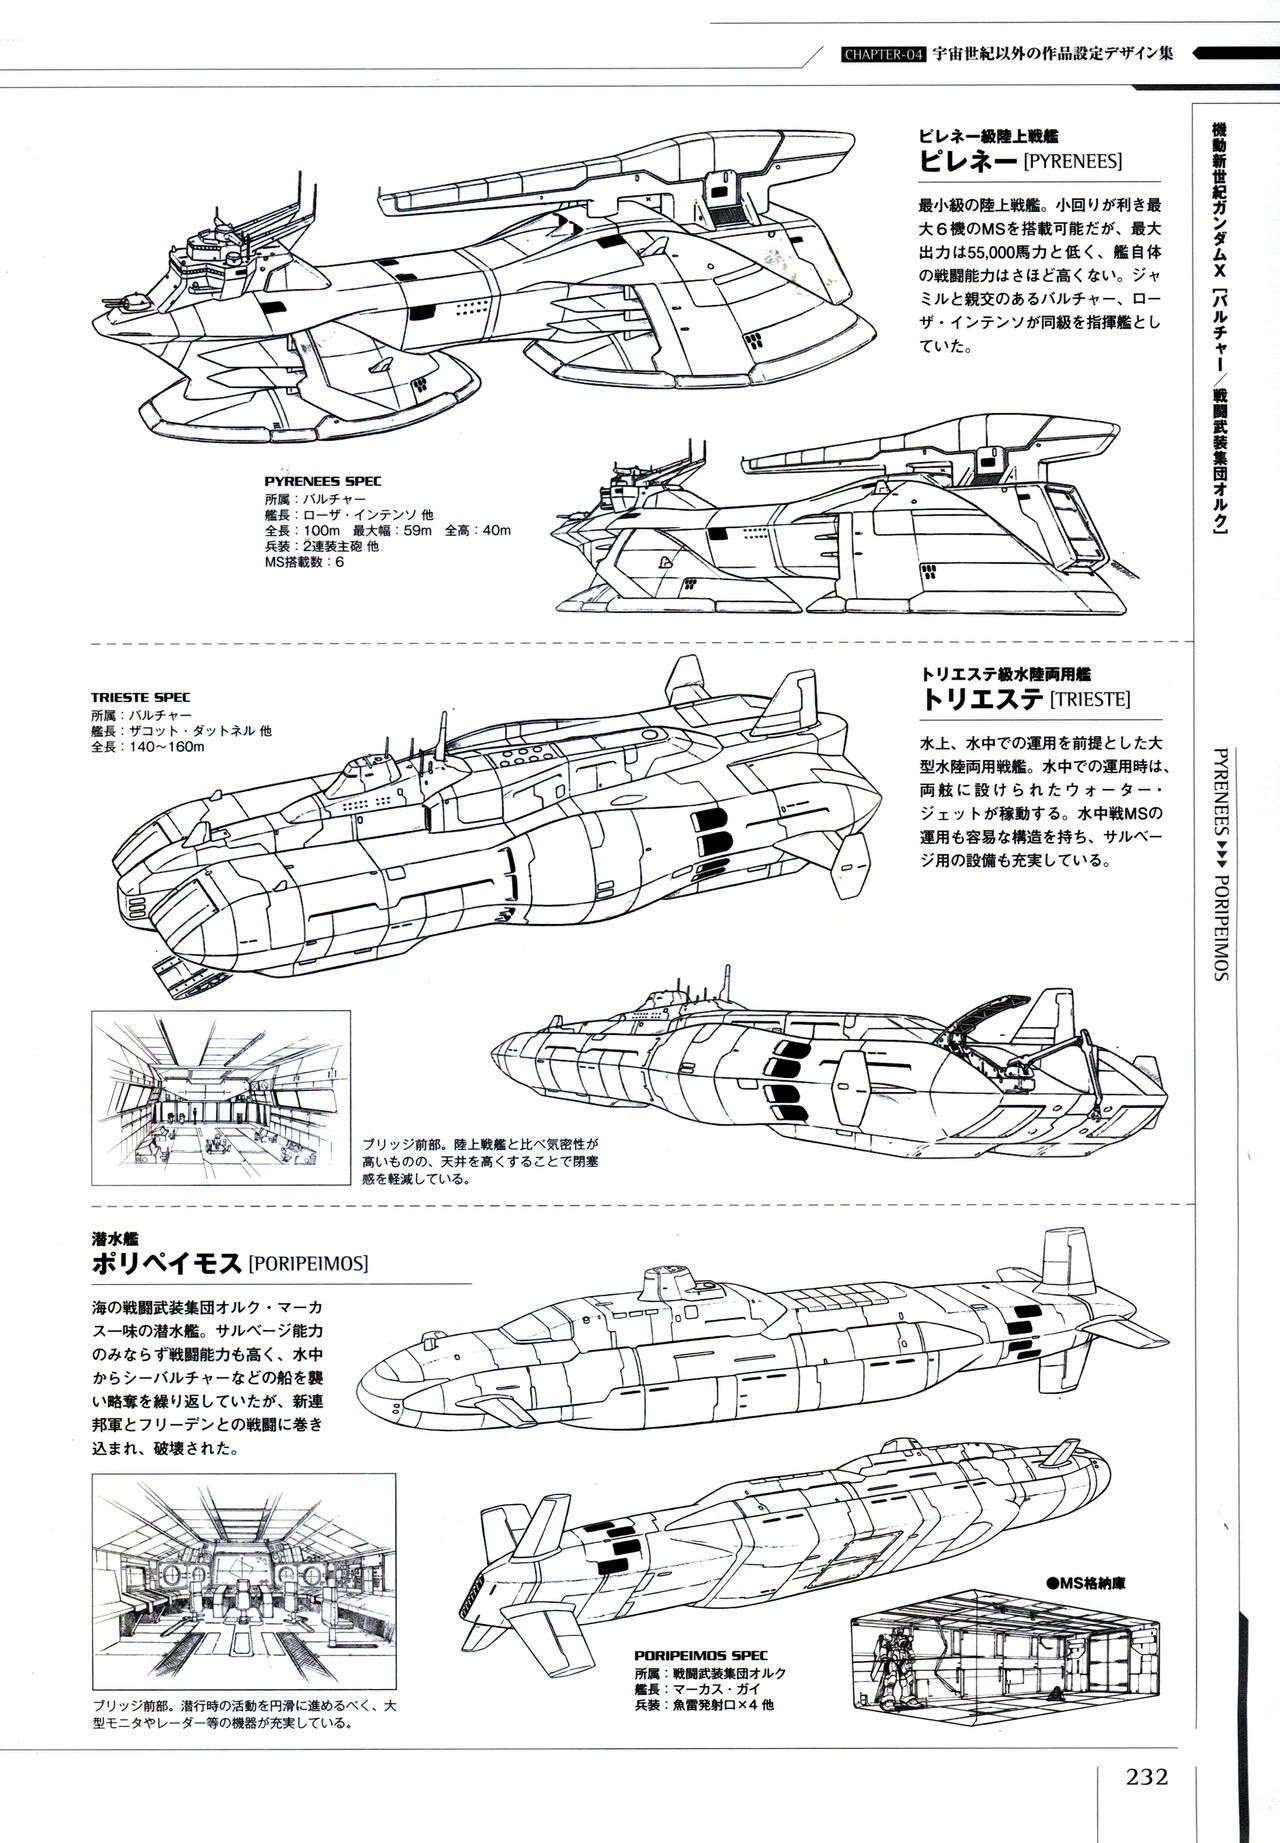 Mobile Suit Gundam - Ship & Aerospace Plane Encyclopedia - Revised Edition 237